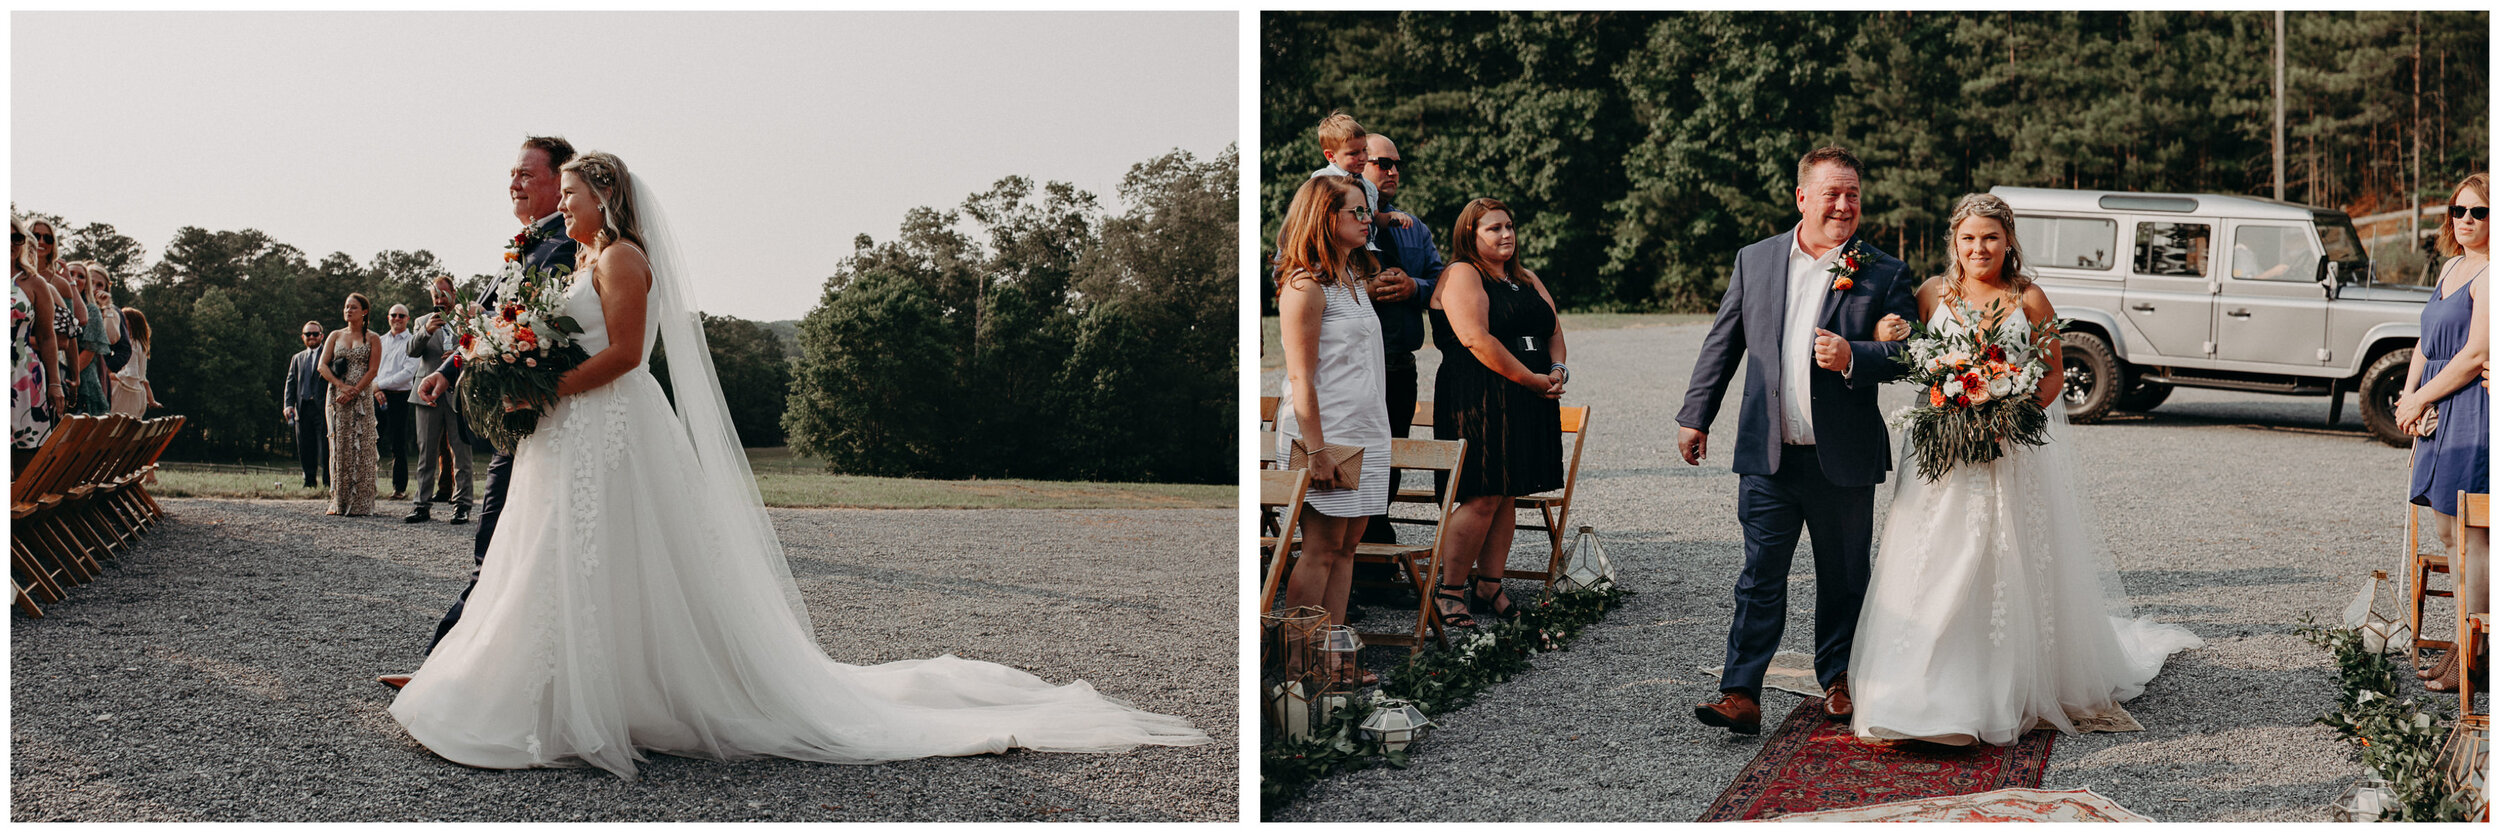 Atlanta_Wedding Day || The Farm at Rome-Ga, Aline Marin Photography65.jpg